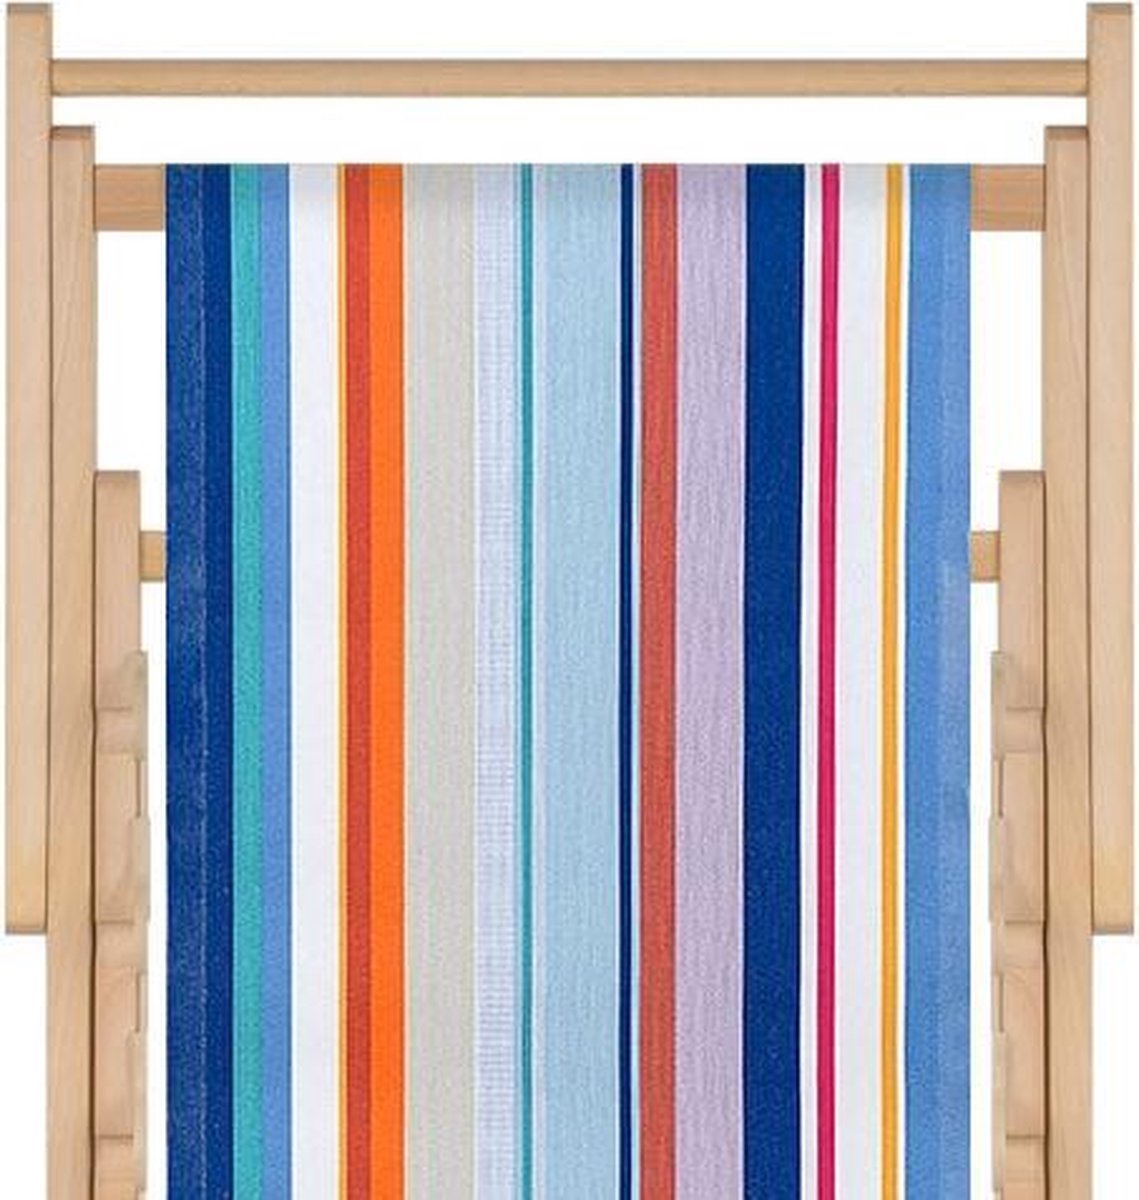 Houten strandstoel met hoogwaardige stof in acryl - massief beukehout - Canet Rousillon blauw oranje - opvouwbaar - verstelbaar in 3 standen - zonder armleuning - afneembare hoes - multicolour - strepenpatroon